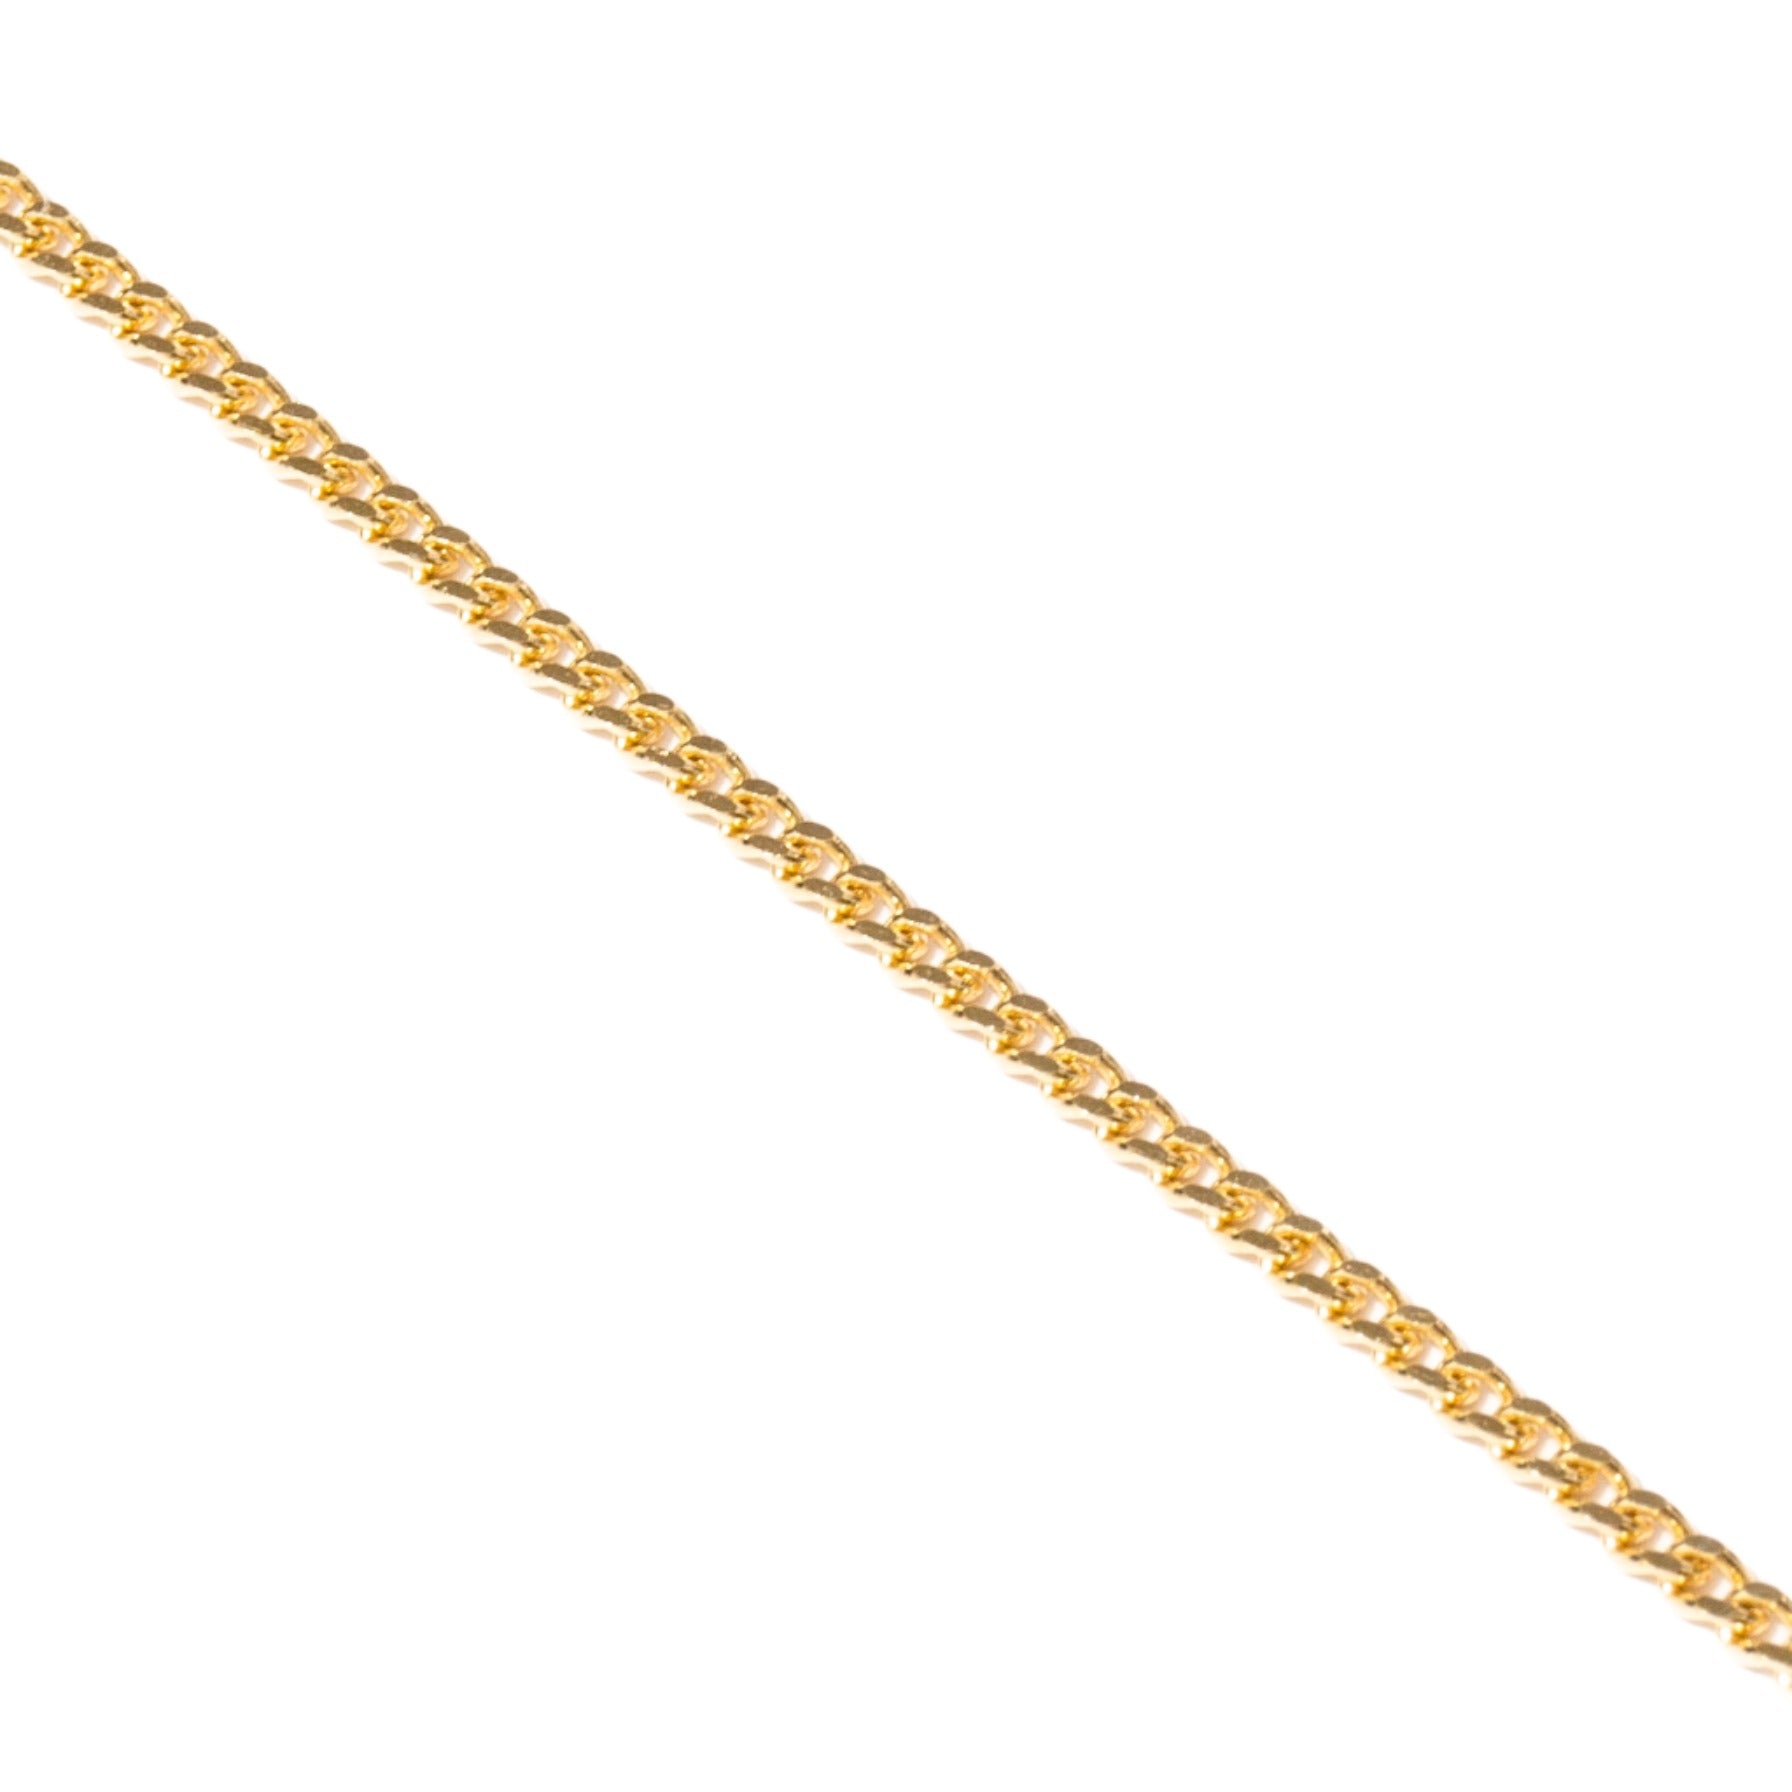 Stunning Curb Bracelet In 14K Solid Gold